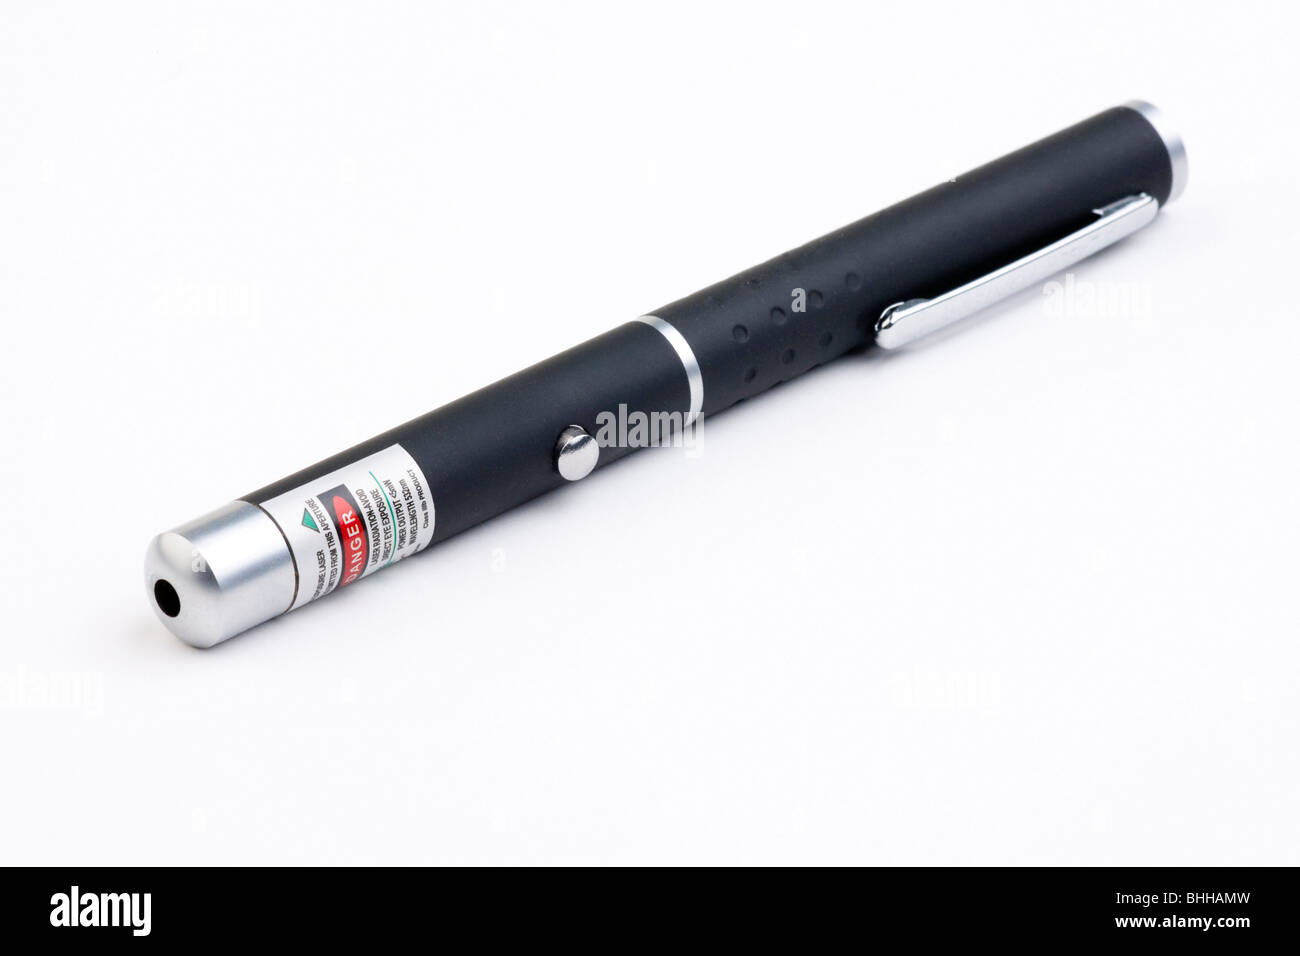 Puntatore laser penna Foto stock - Alamy